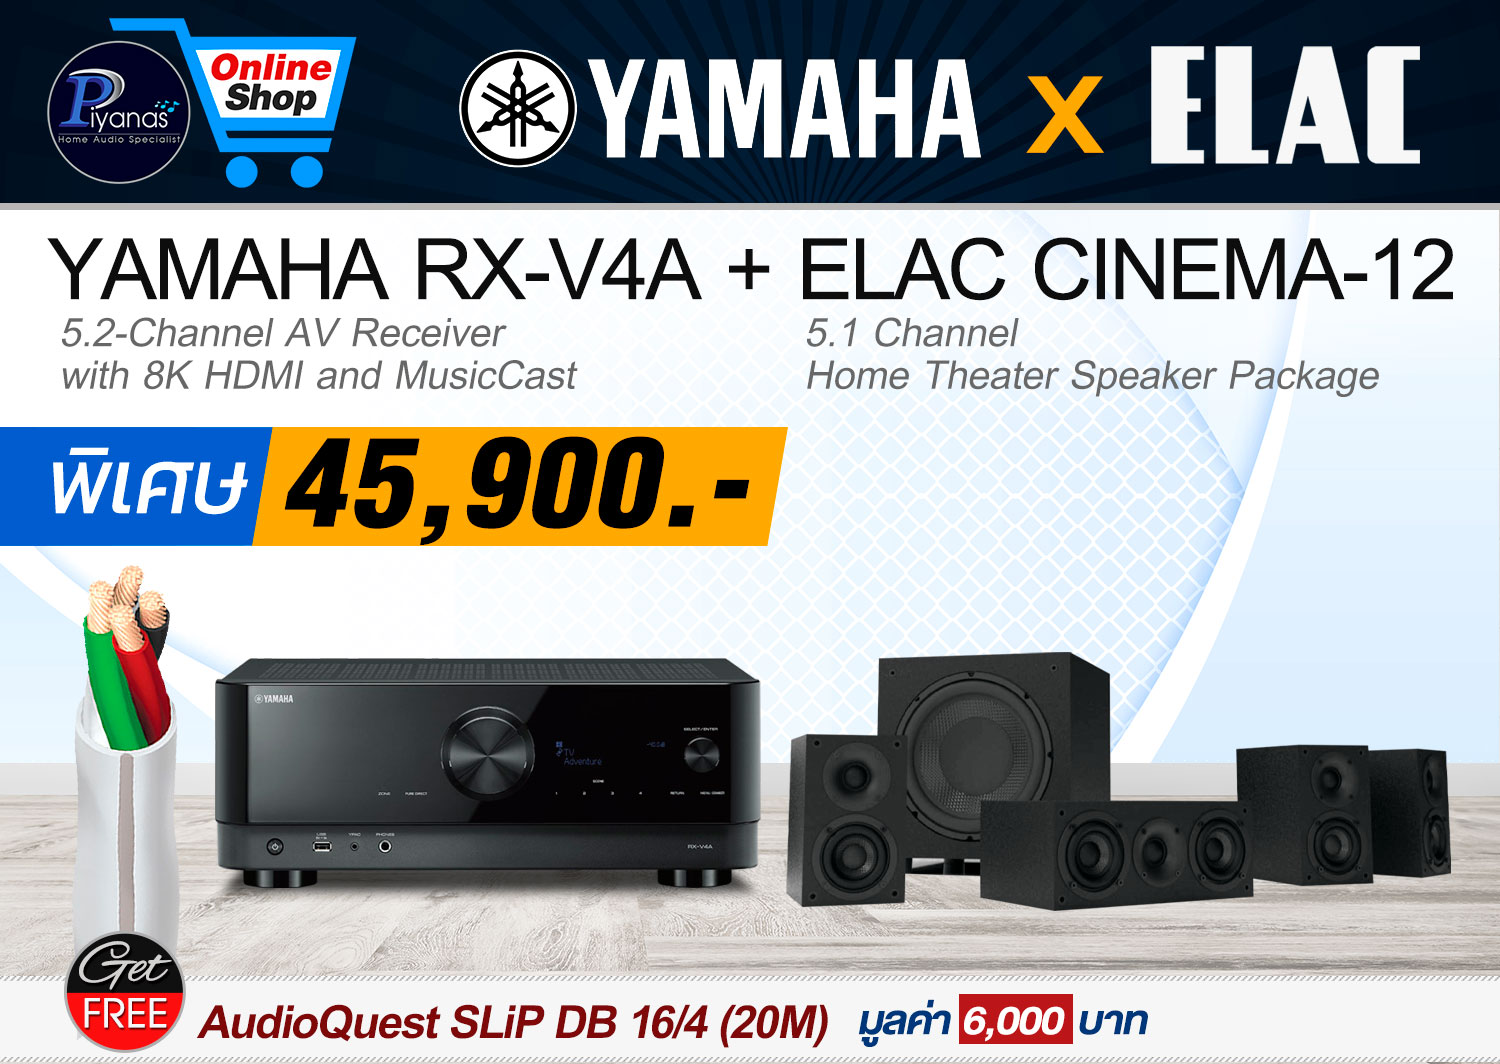 RX-V4A + Elac Cinema 12